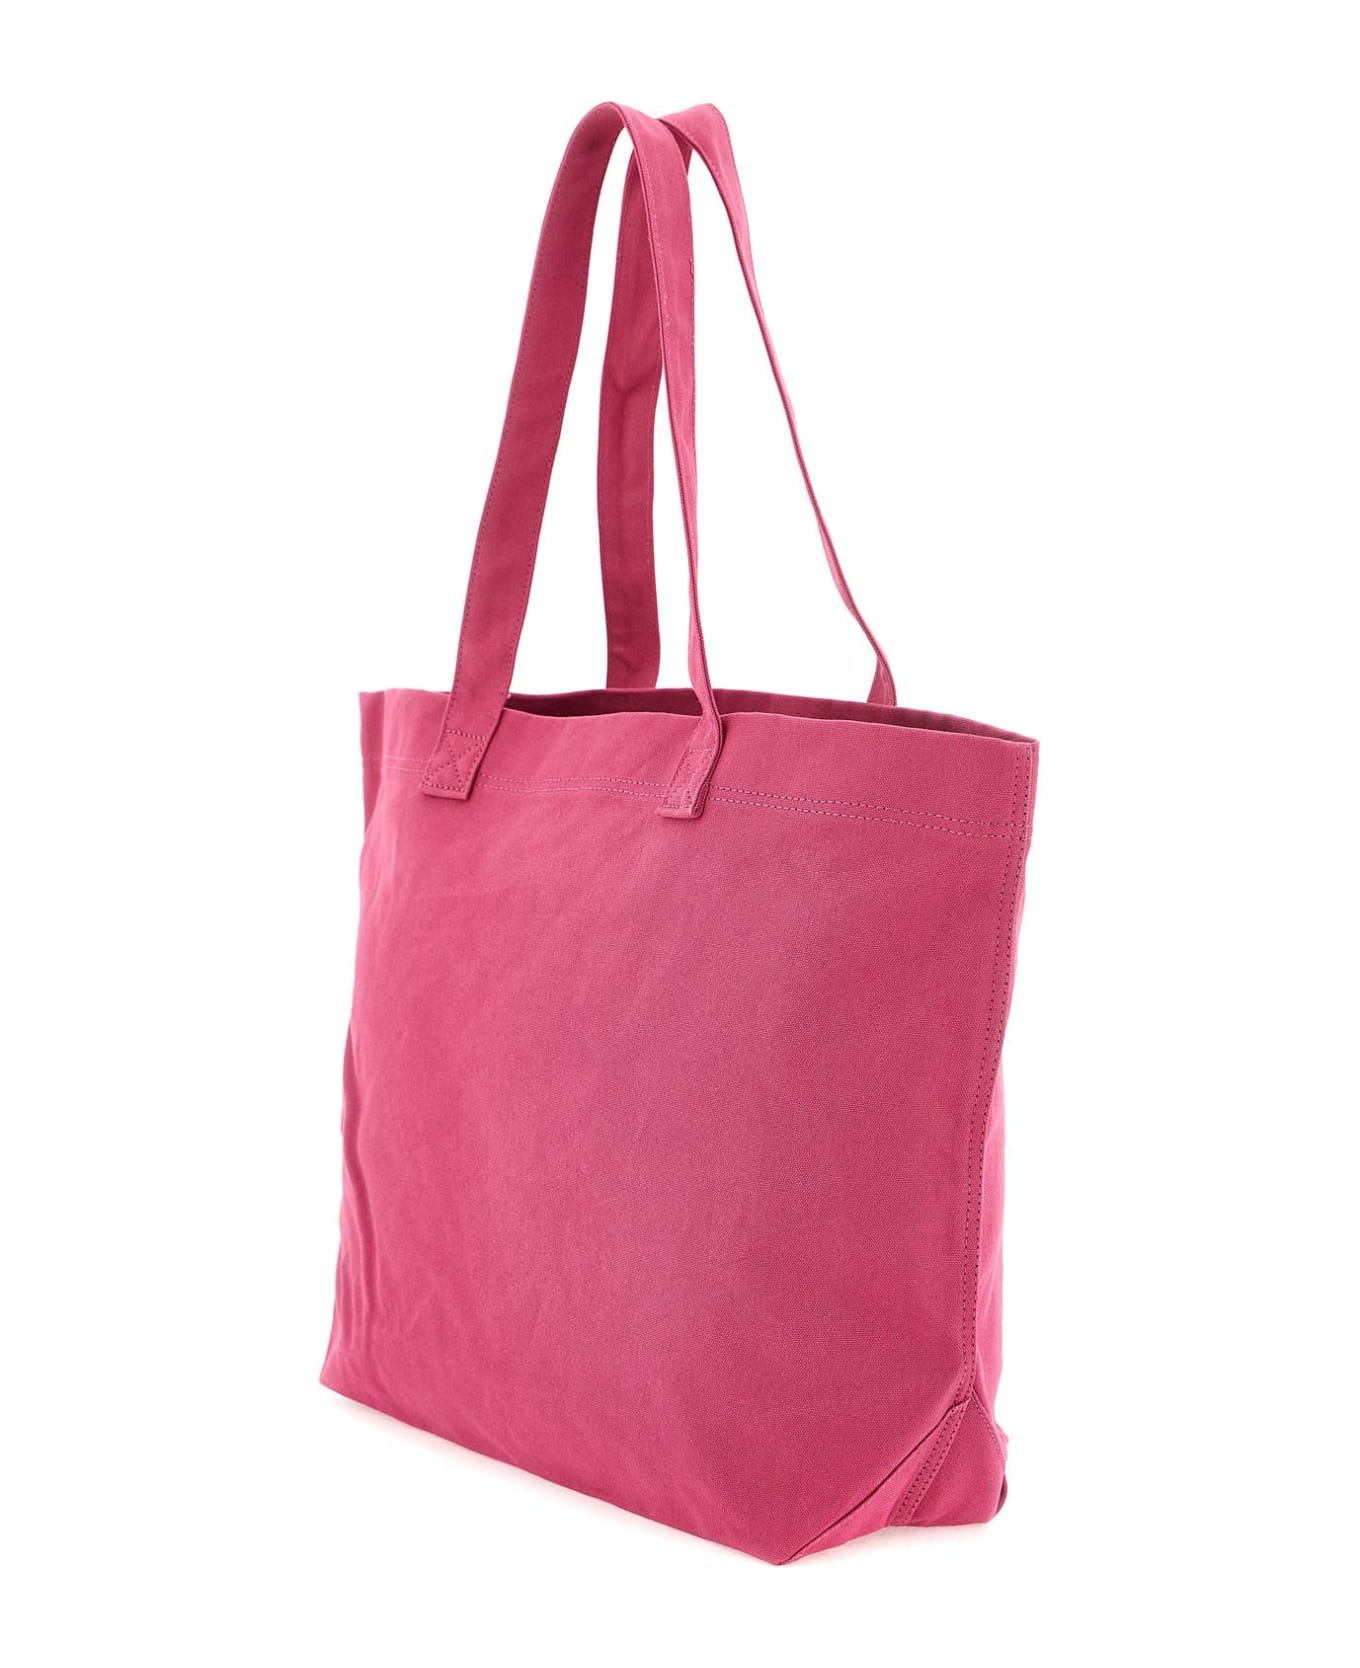 DRKSHDW Tote Bag - HOT PINK (Pink) トートバッグ